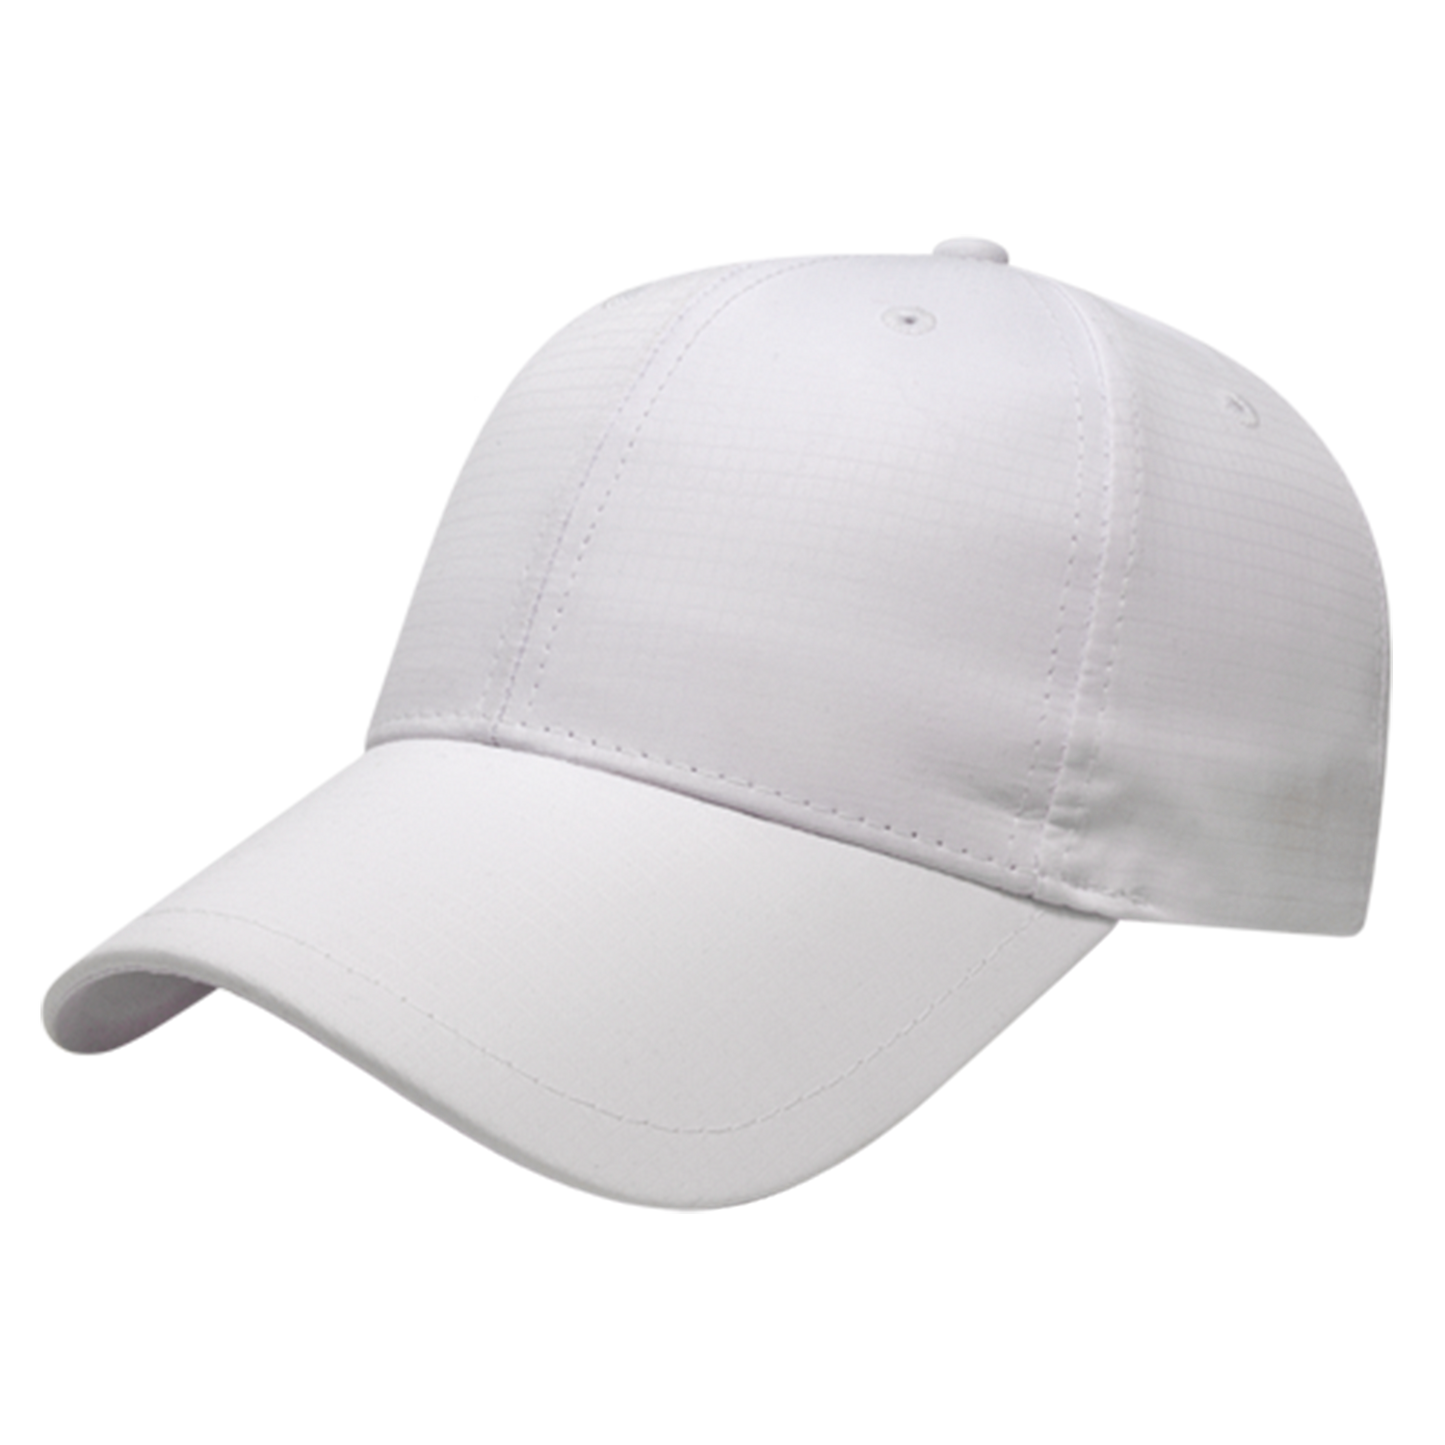 Soft Fit Solid Active Wear Cap